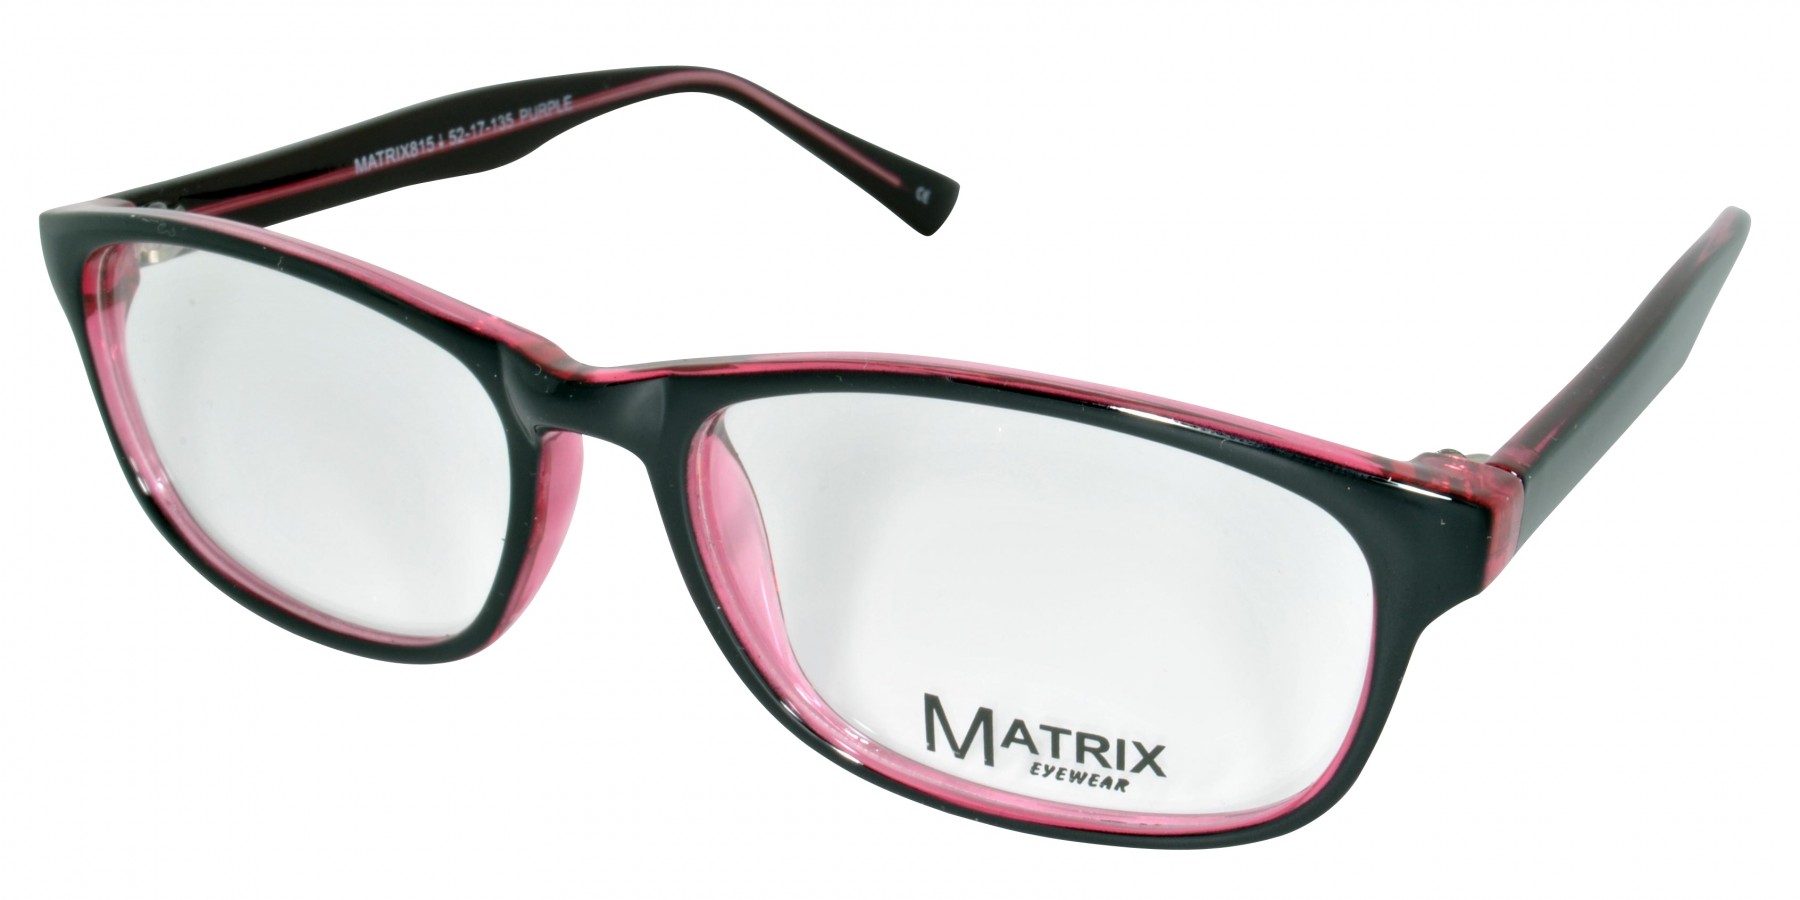 Matrix 815 Prescription Glasses